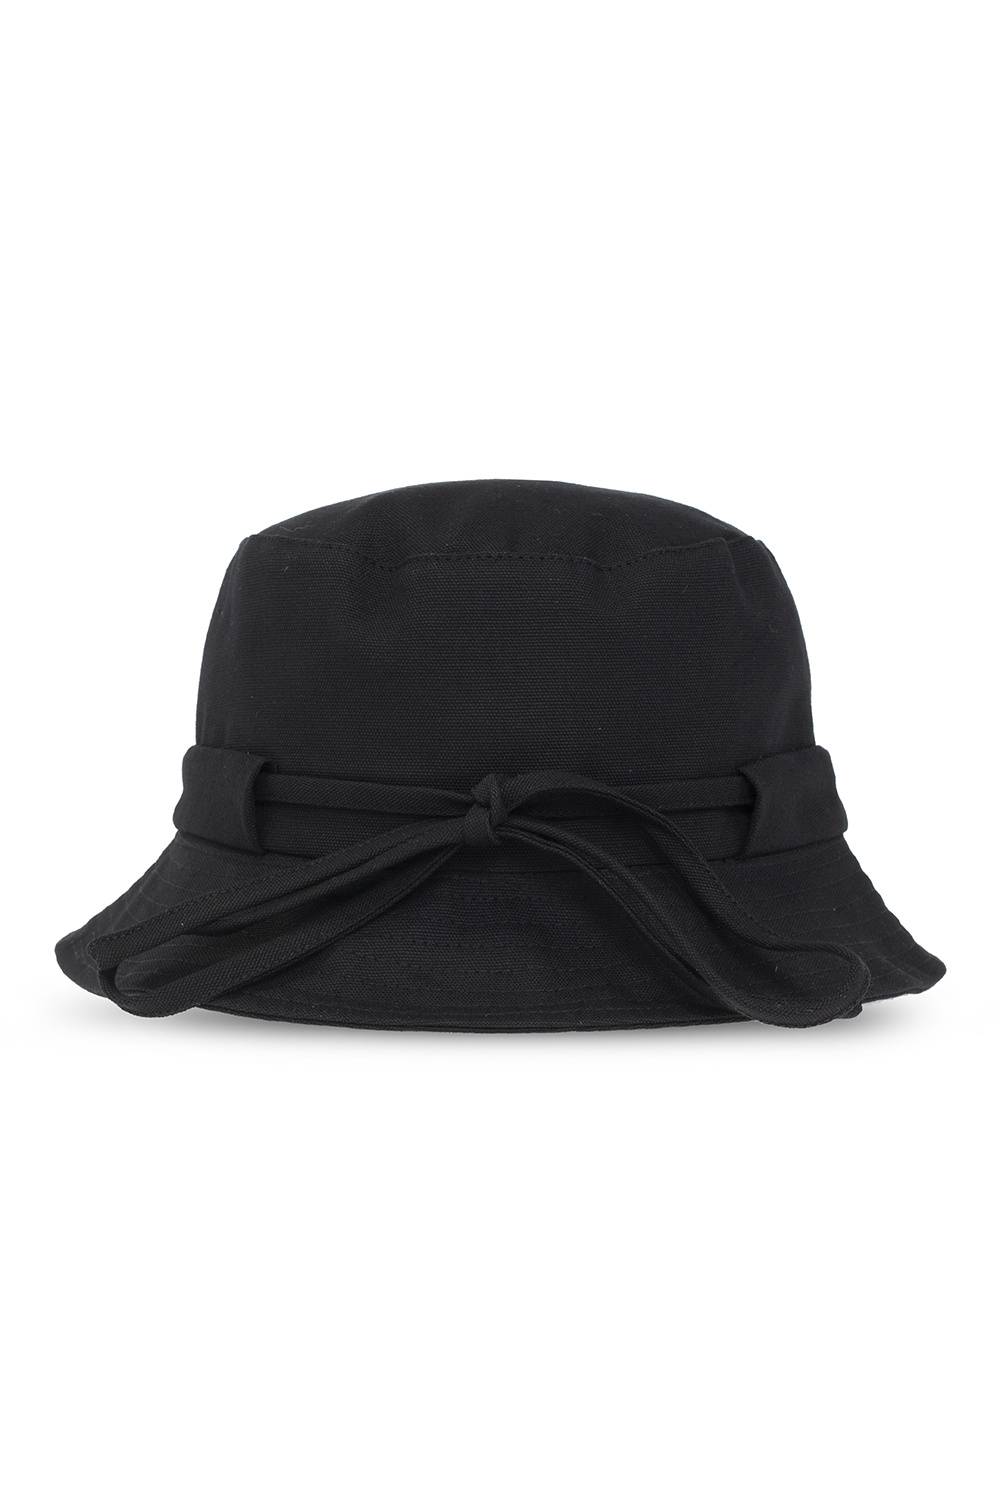 Black Bucket wide-brimmed hat with logo Jacquemus - Jamie felt cap 